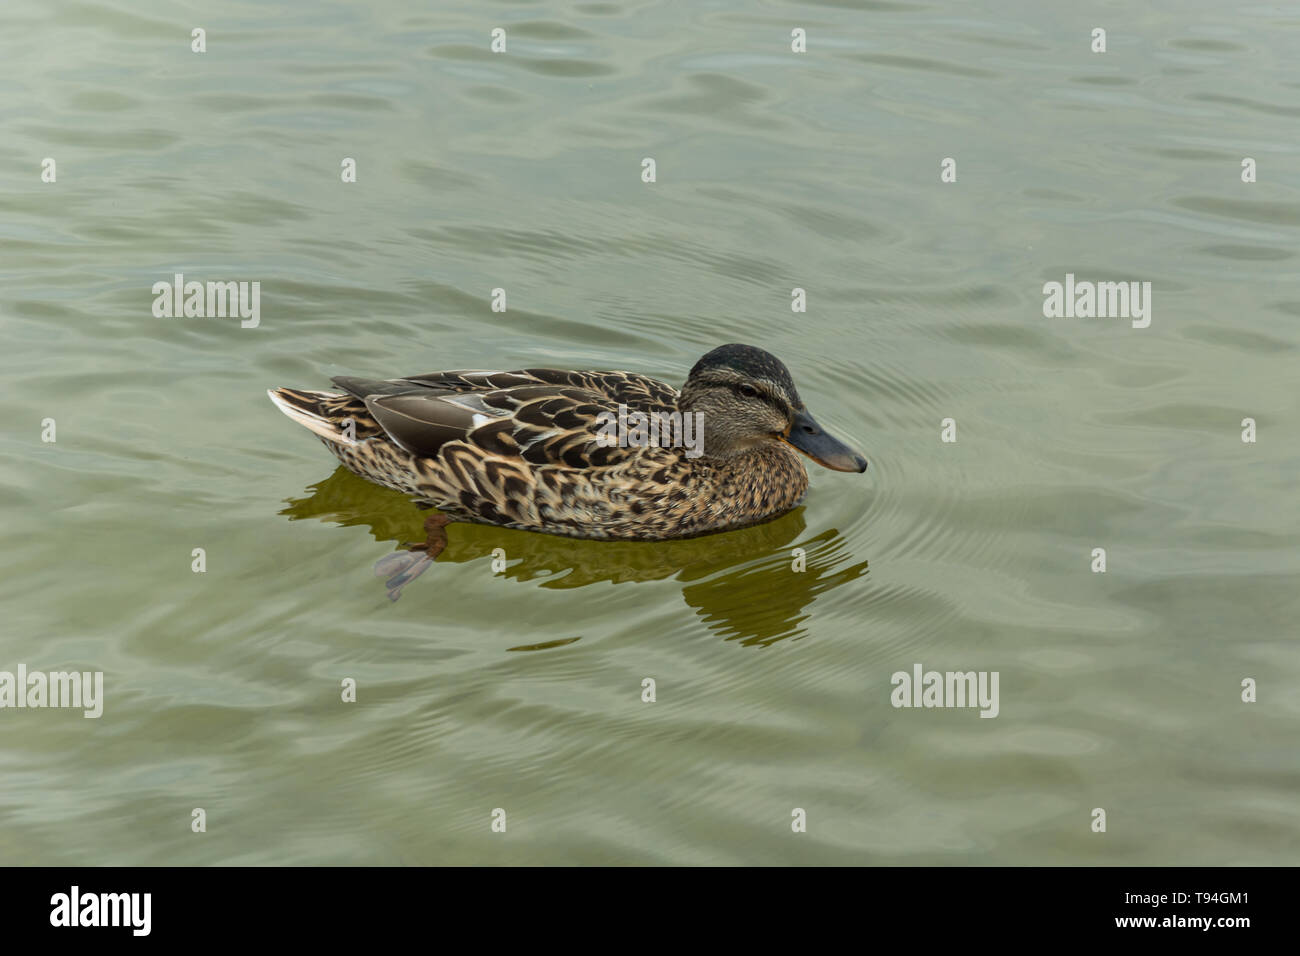 Brown mallard duck swimming in the water - female Stock Photo